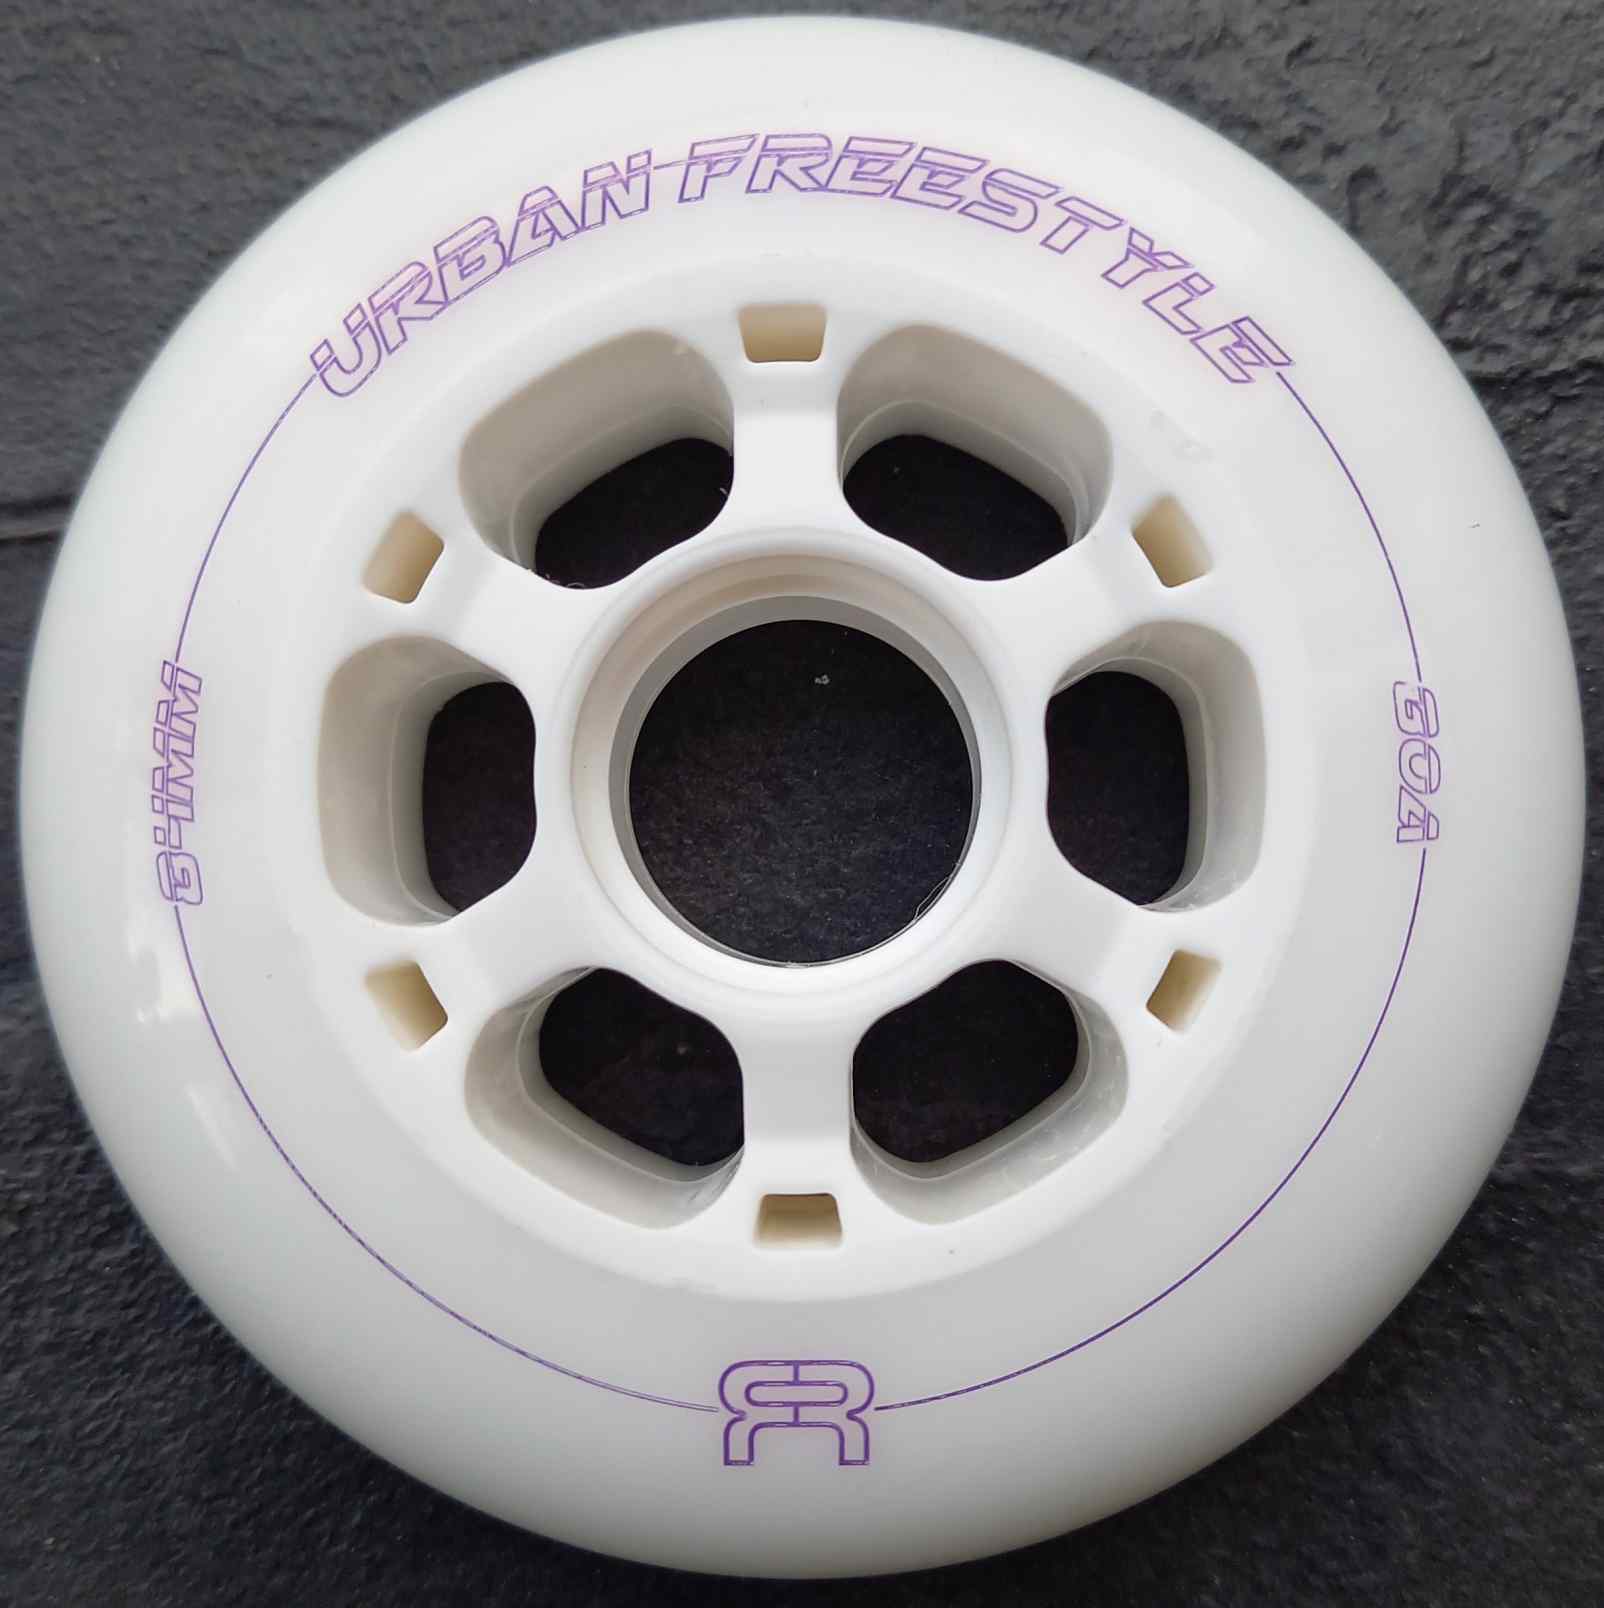 FR Urban Freestyle wheel 84mm diameter 80A durometer